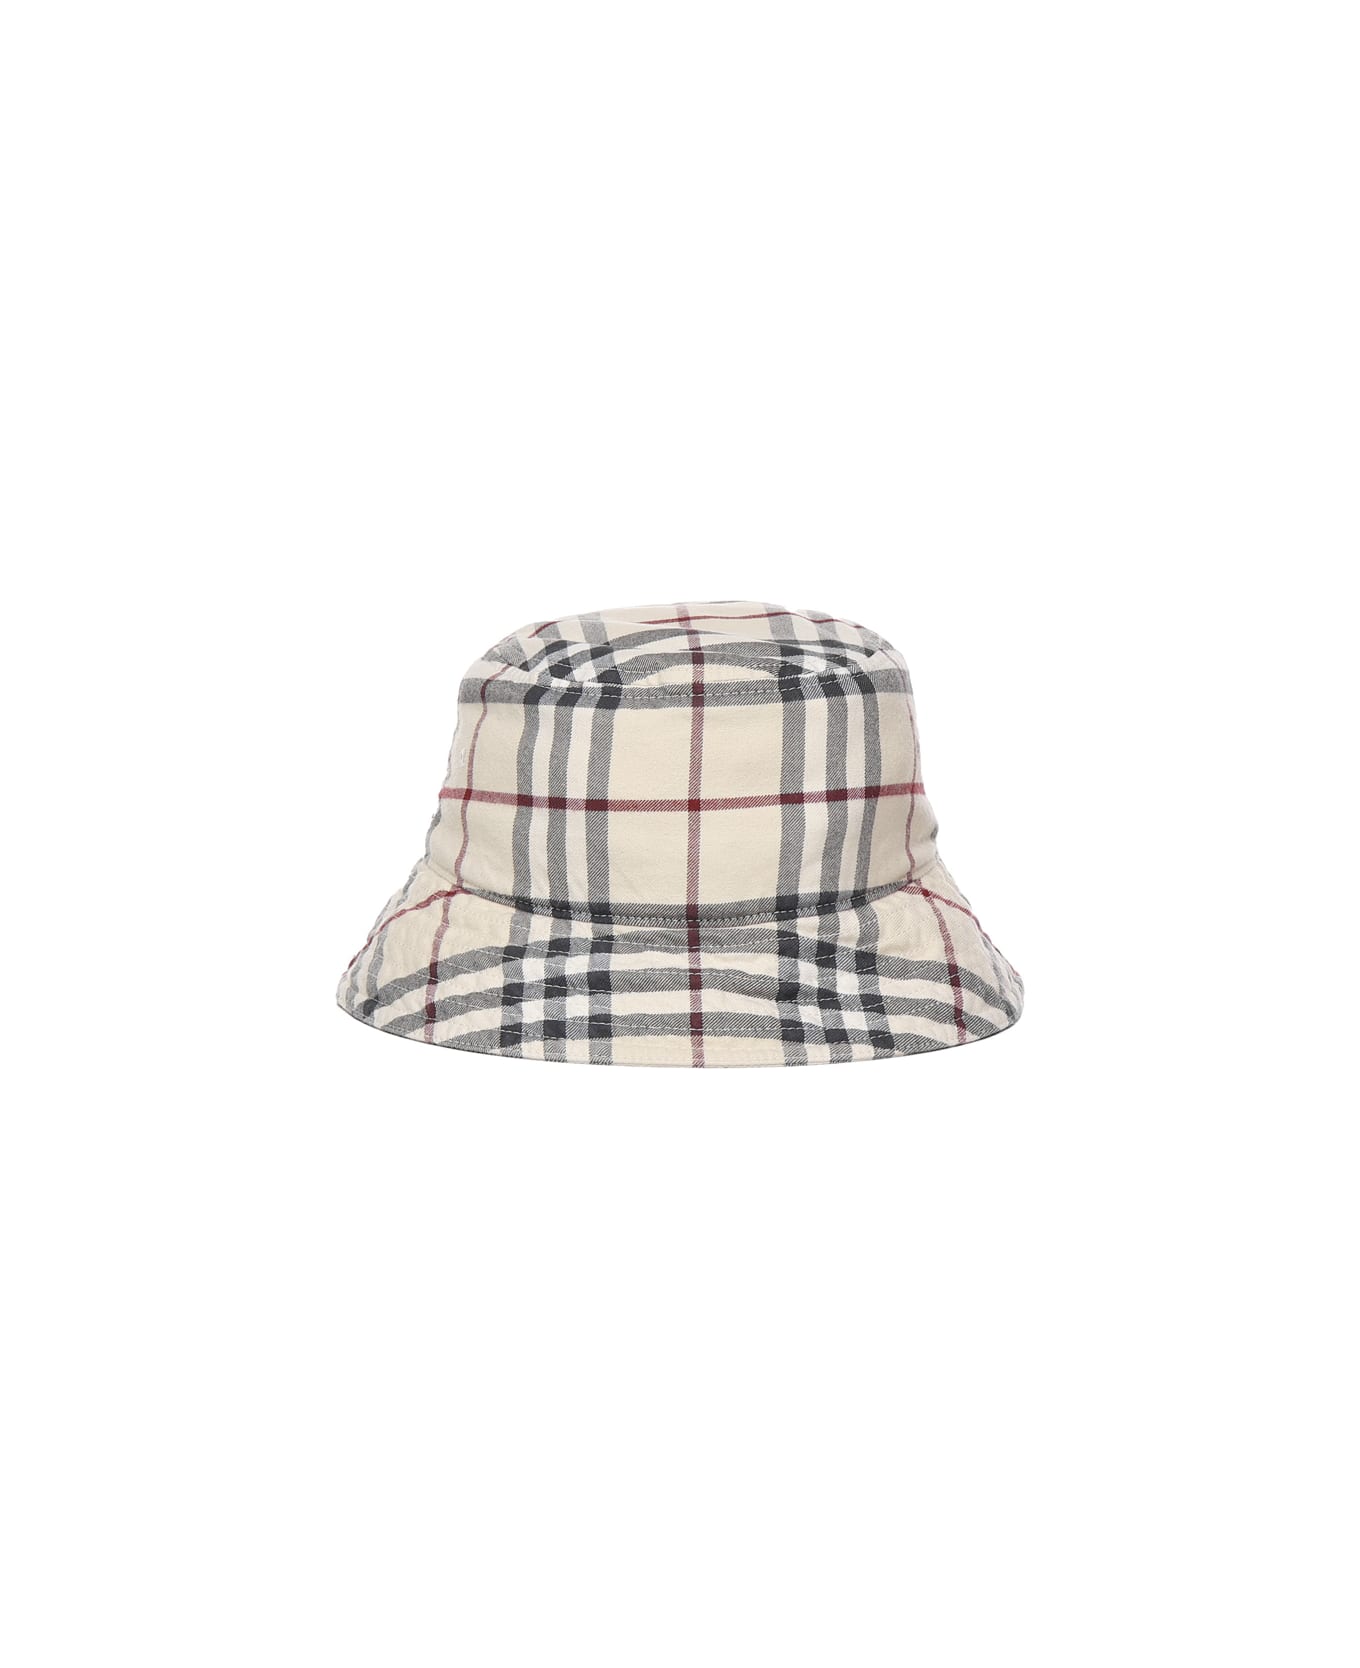 Burberry Vintage Check Bucket Hat - Vintage check